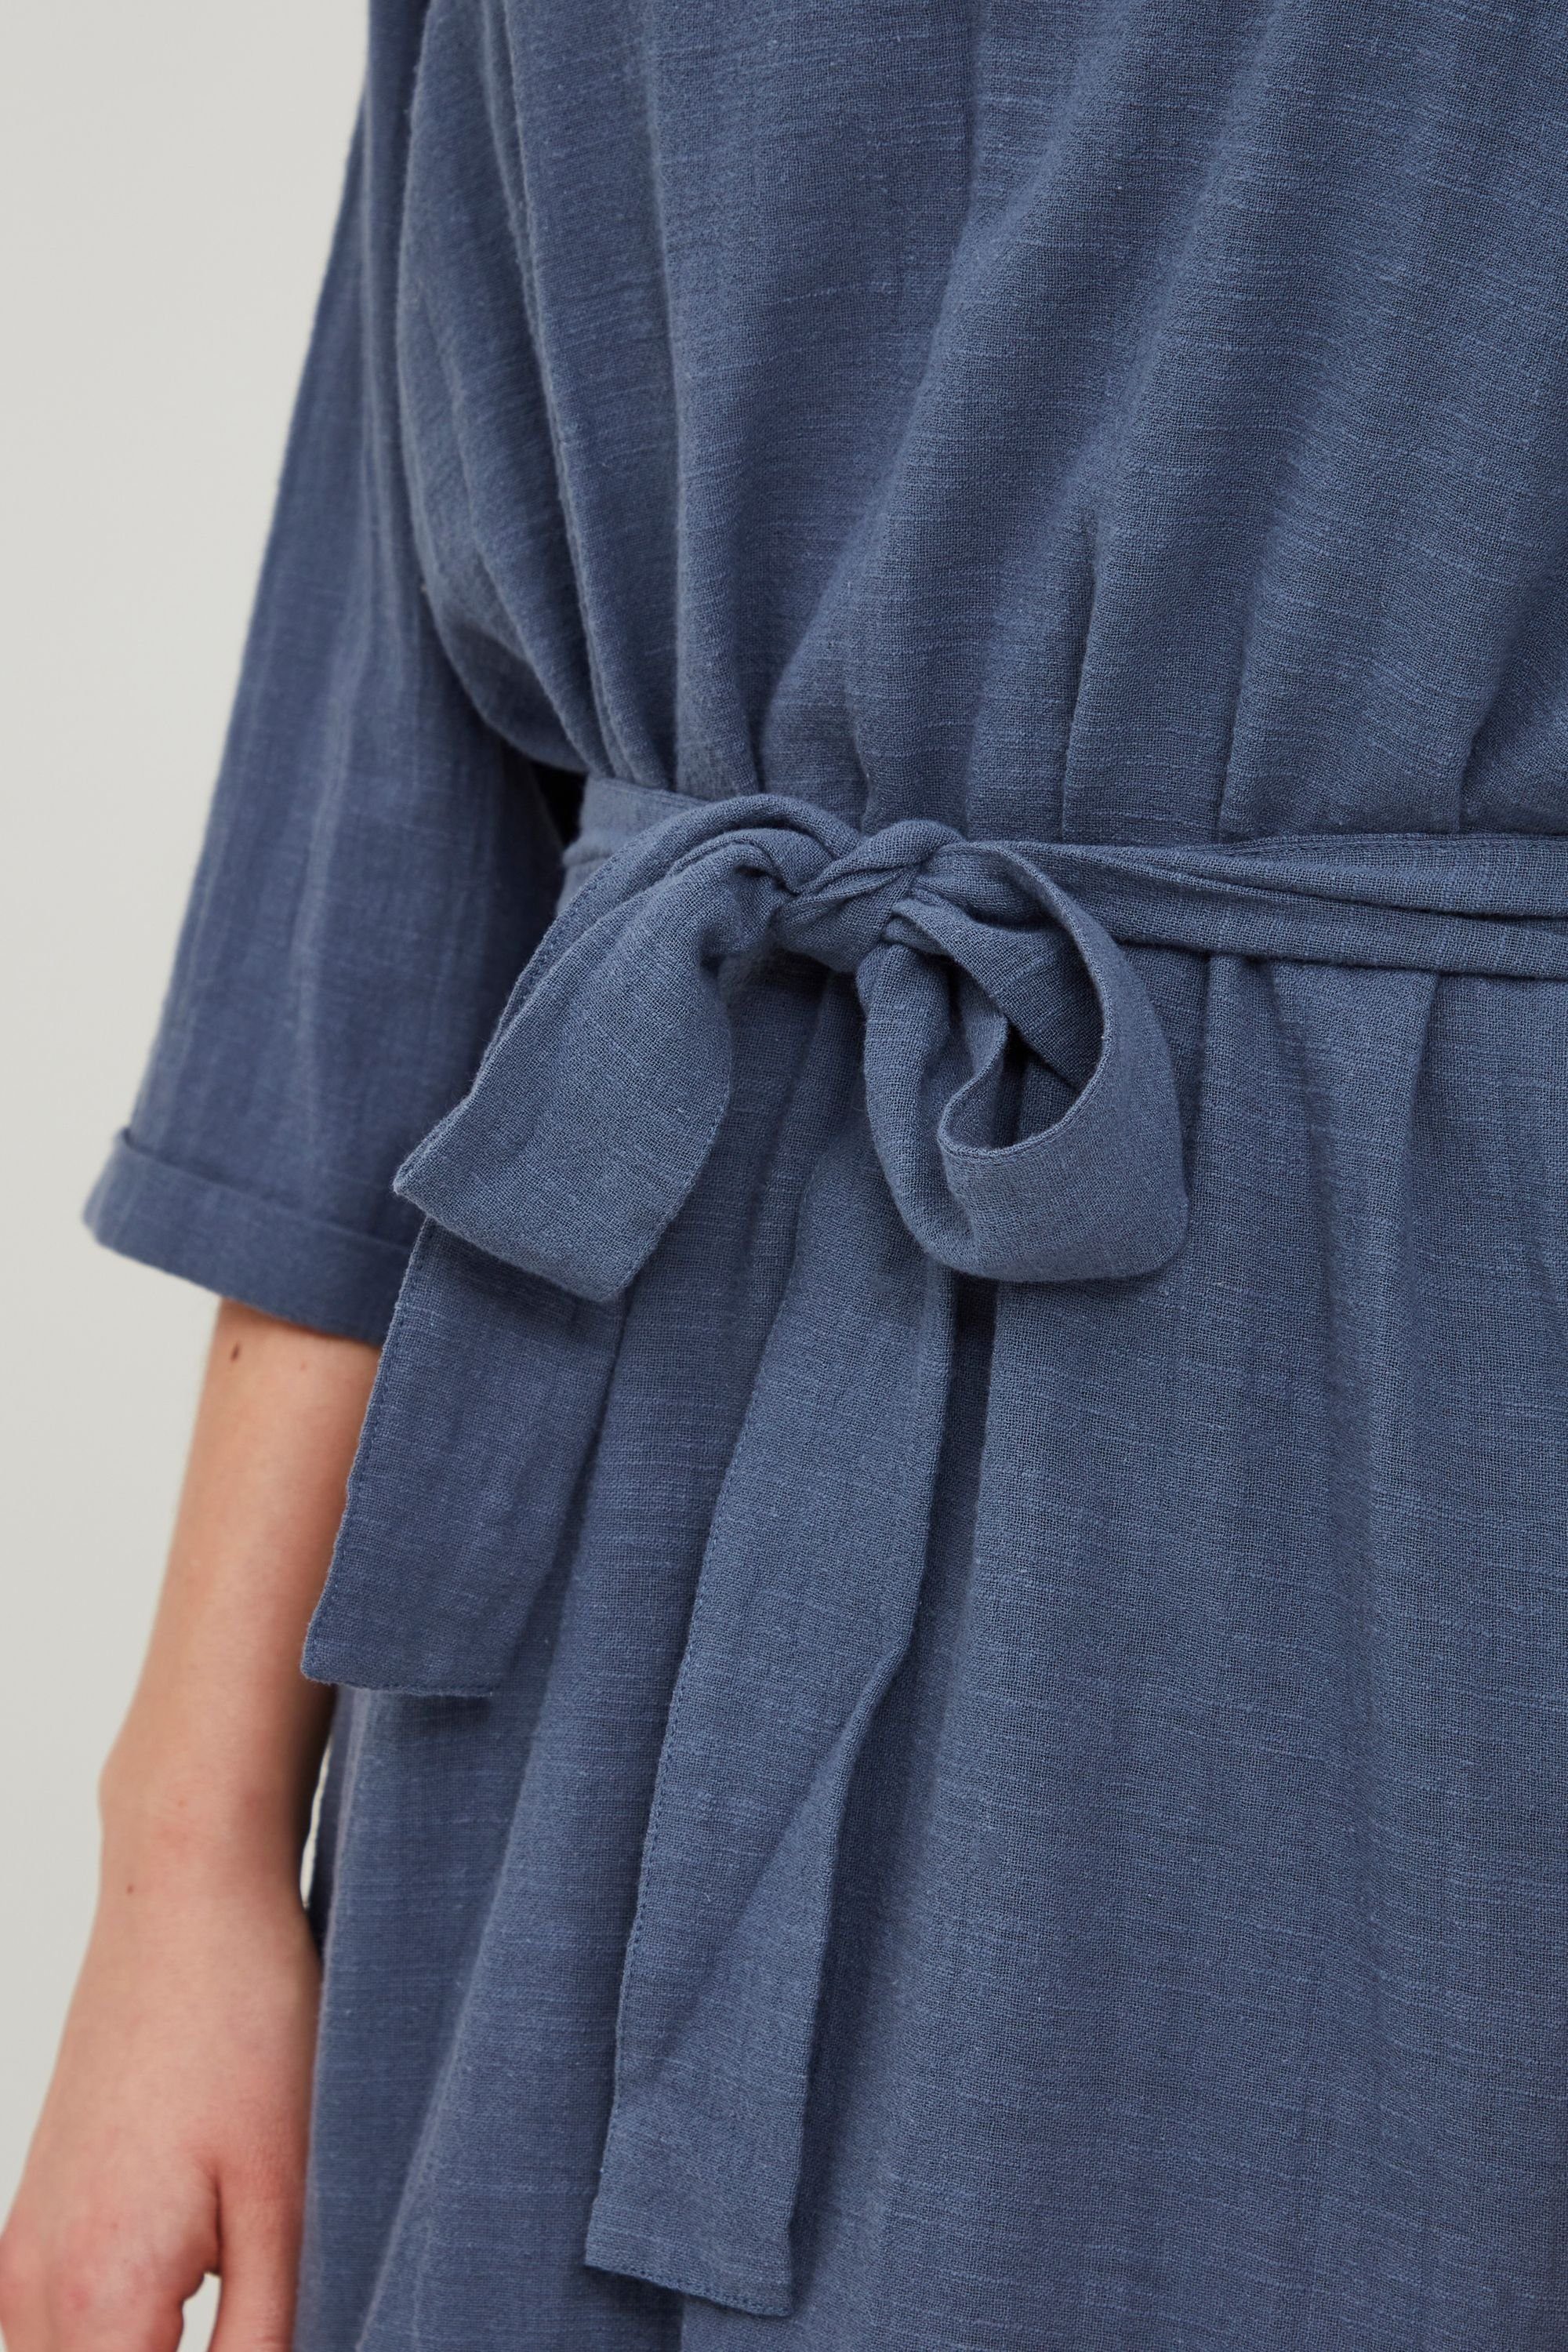 4 Blusenkleid FRALSLUB Fransa 20609300 Vintage Indigo fransa - Dress